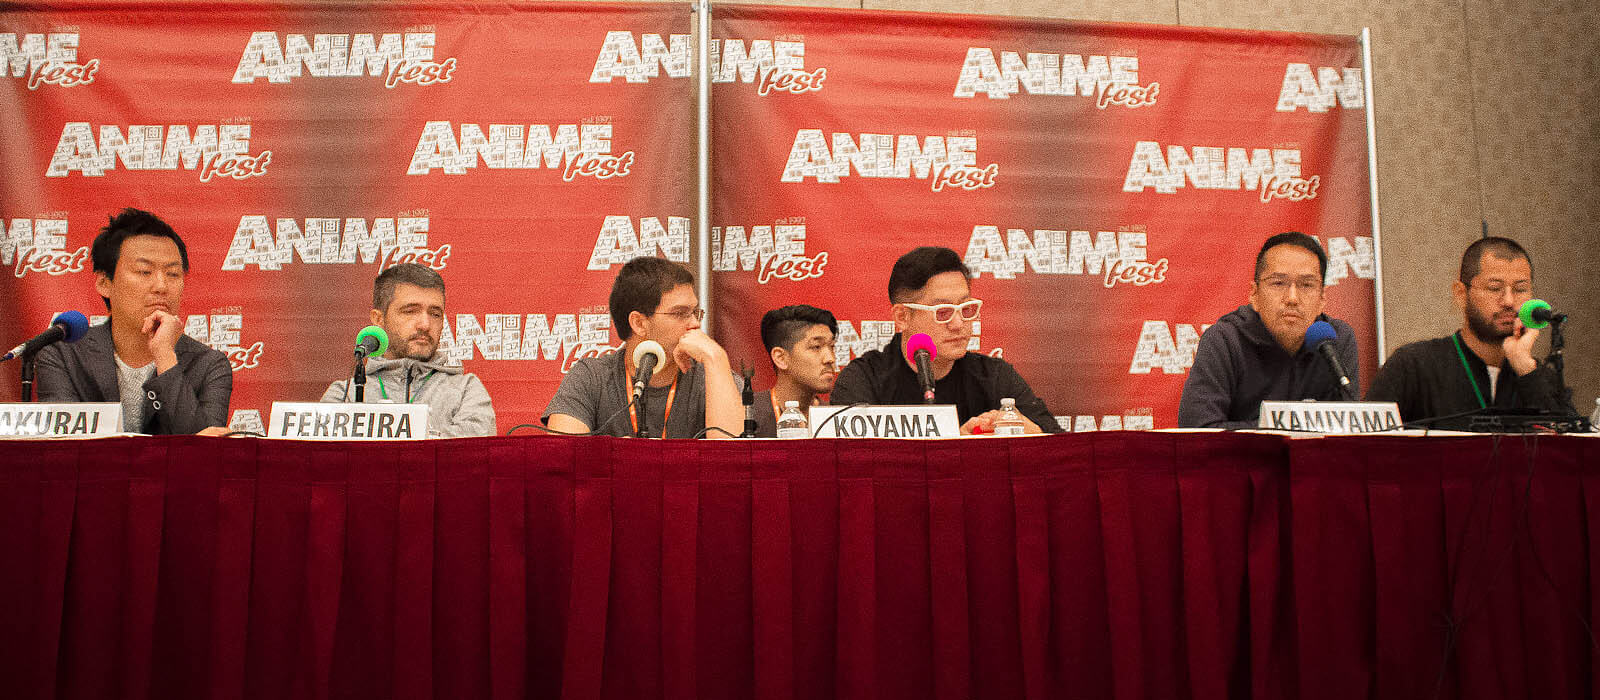 Napping Princess' Staff at AnimeFest 2017 (left to right: Sakurai, Ferreira, Koyama, & Kamiyama)